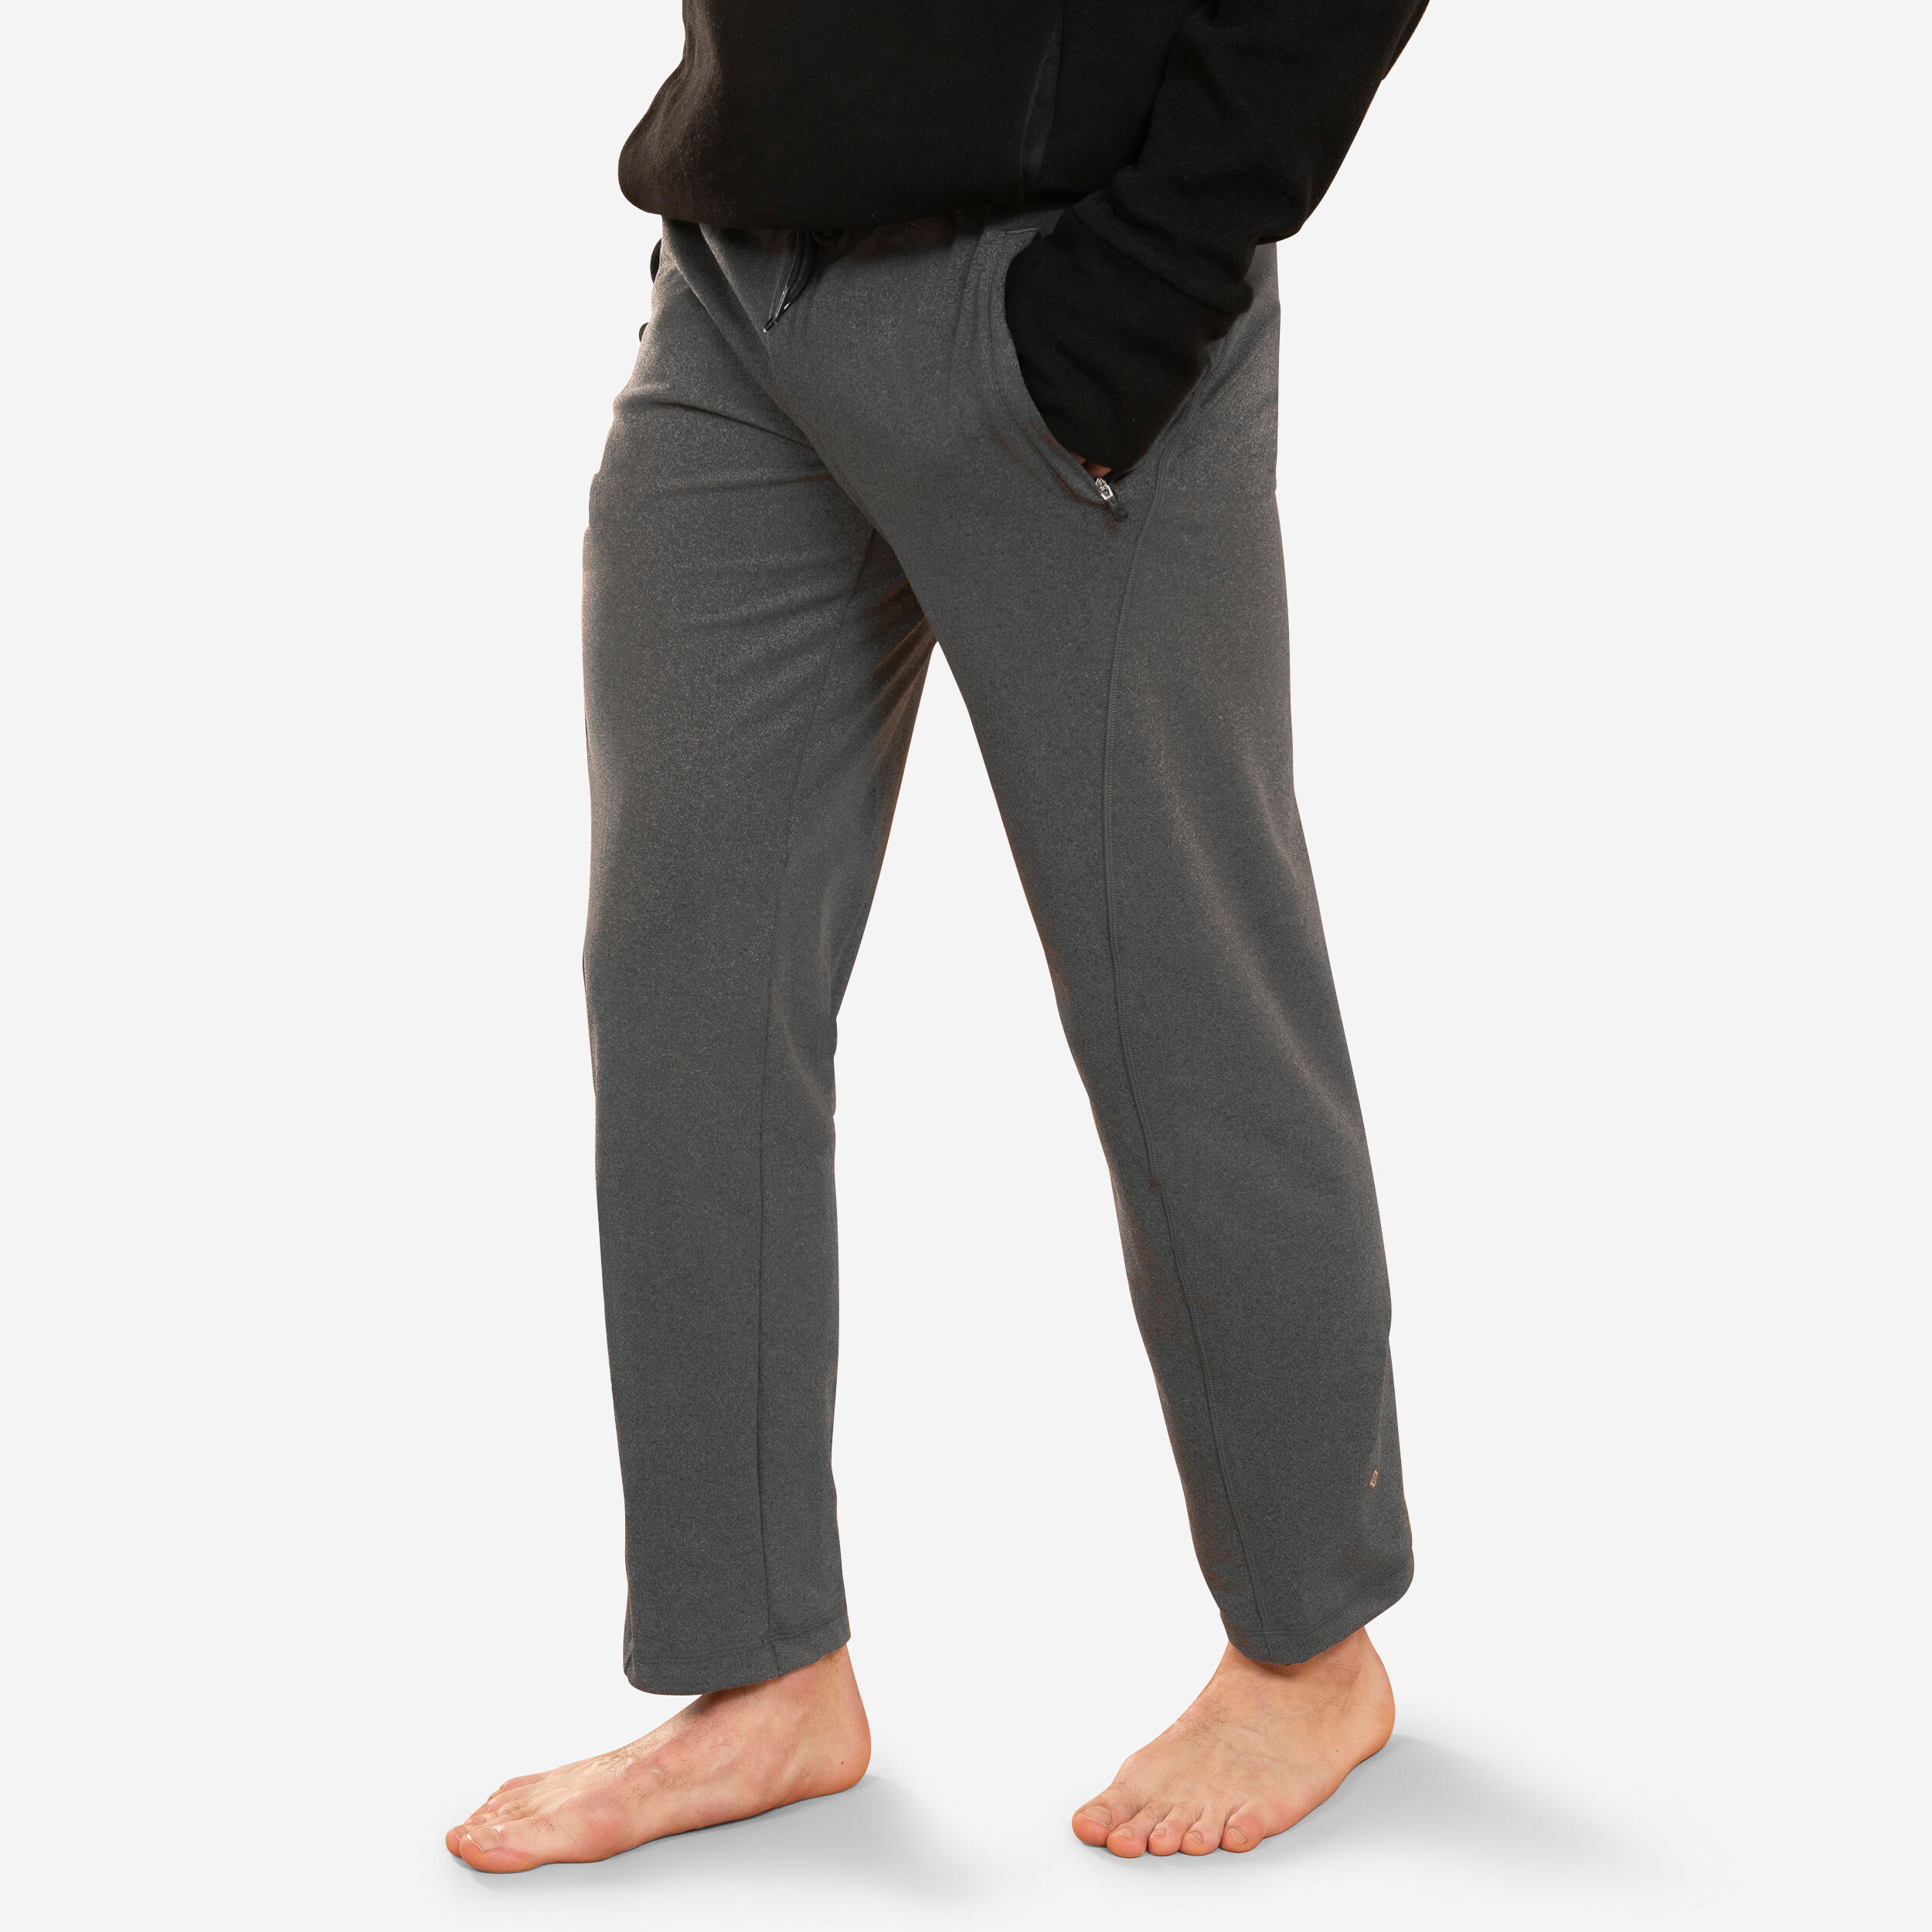 KAM Yoga Pants Women, Unique Yoga Wear, Sport Dance Pants Clothes, Gray  Workout Rayon Yoga Pants. Grey Pants With Protective Knee Pads -  Canada